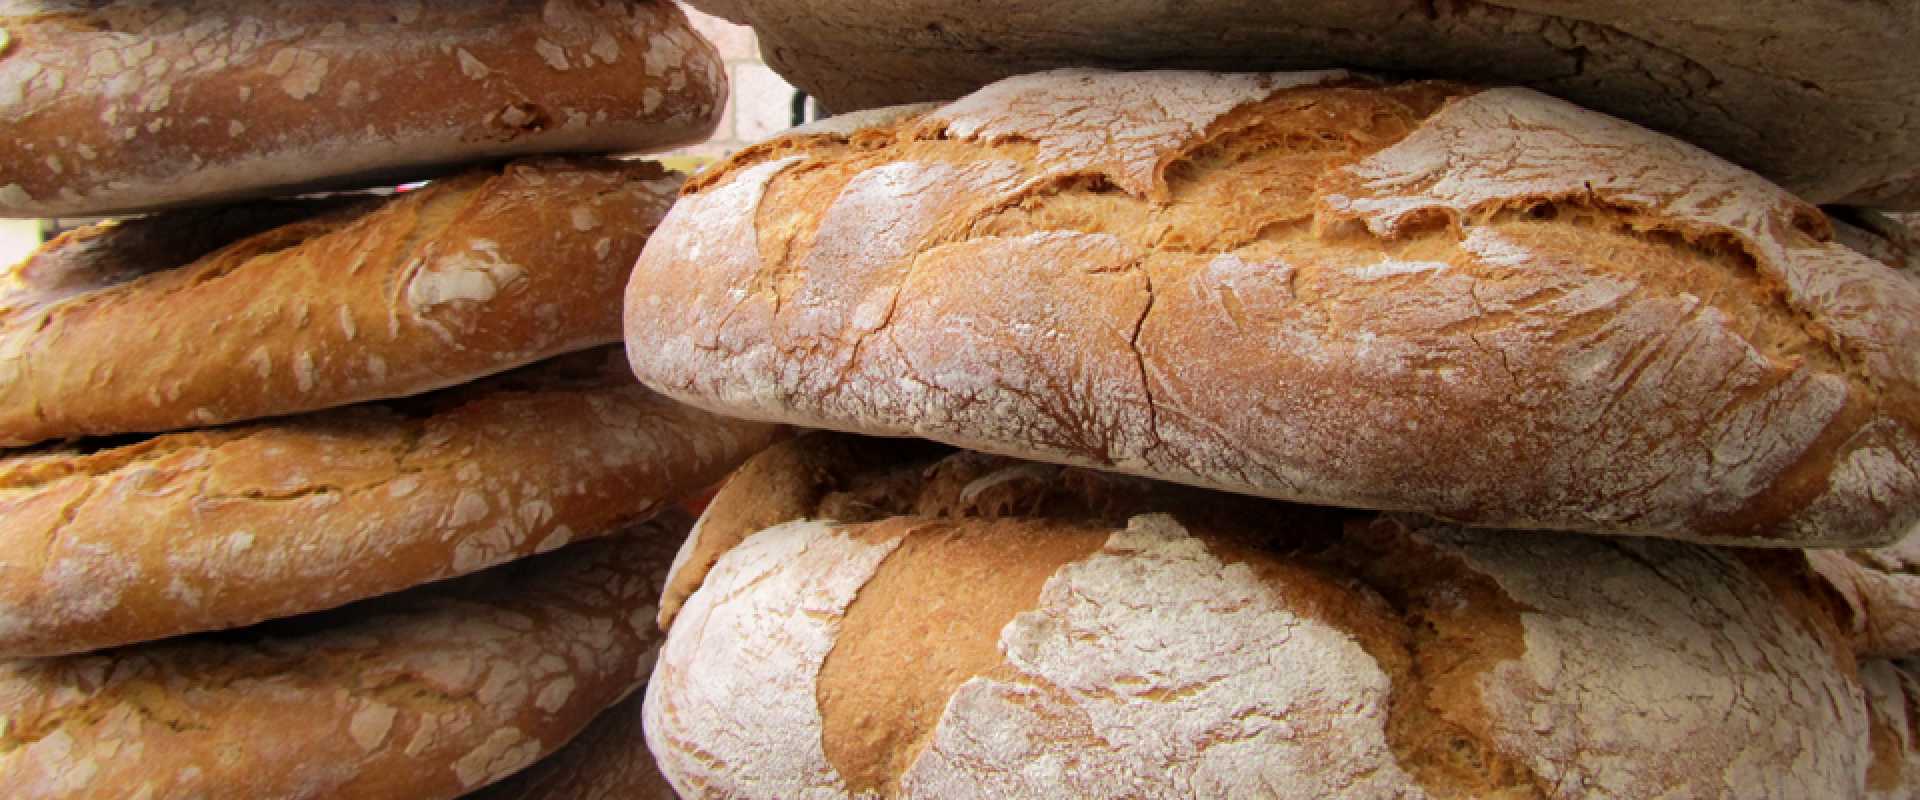 Caldo Gallego Bread 